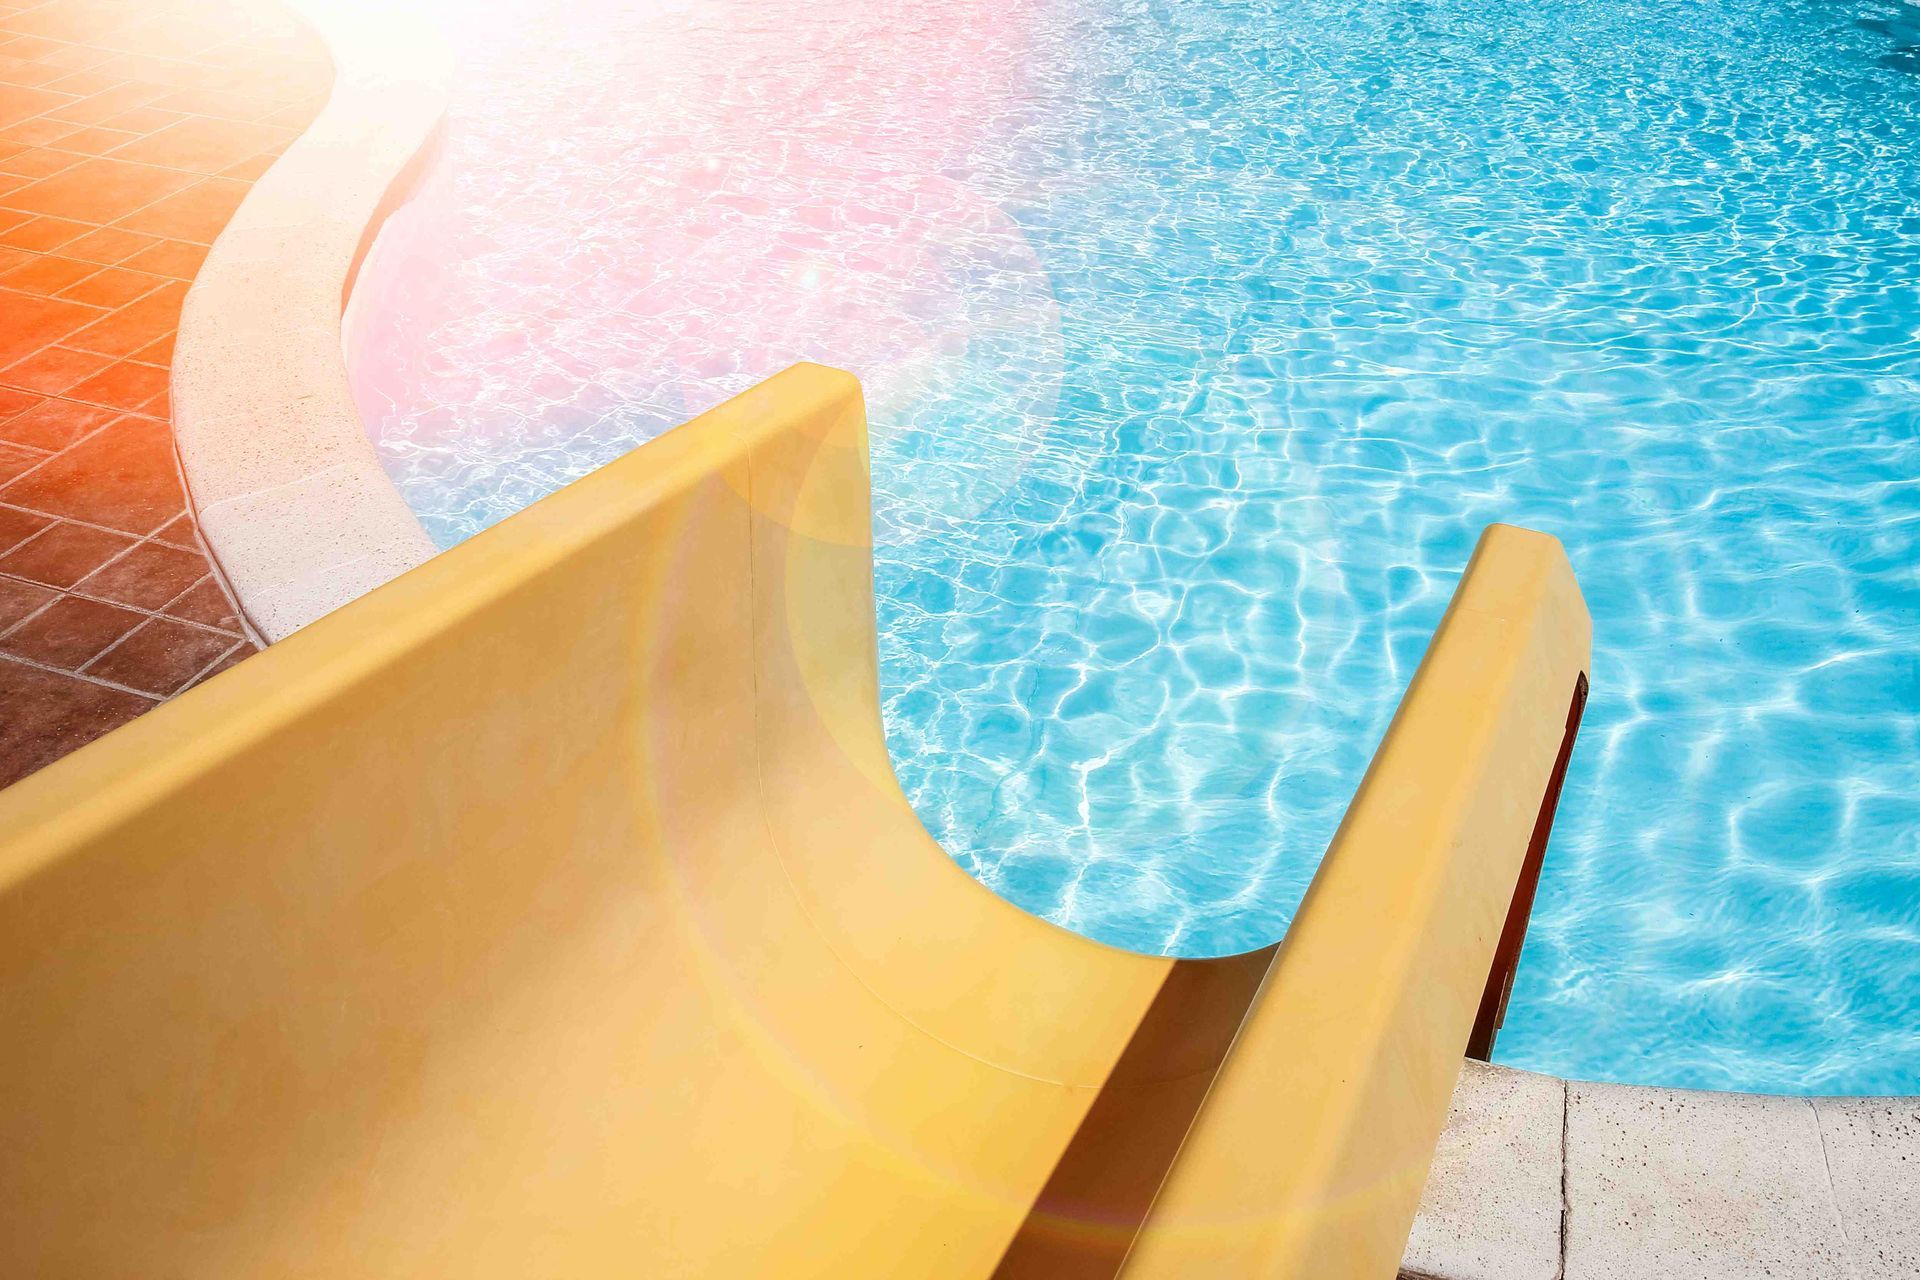 A pool slide at a home pool